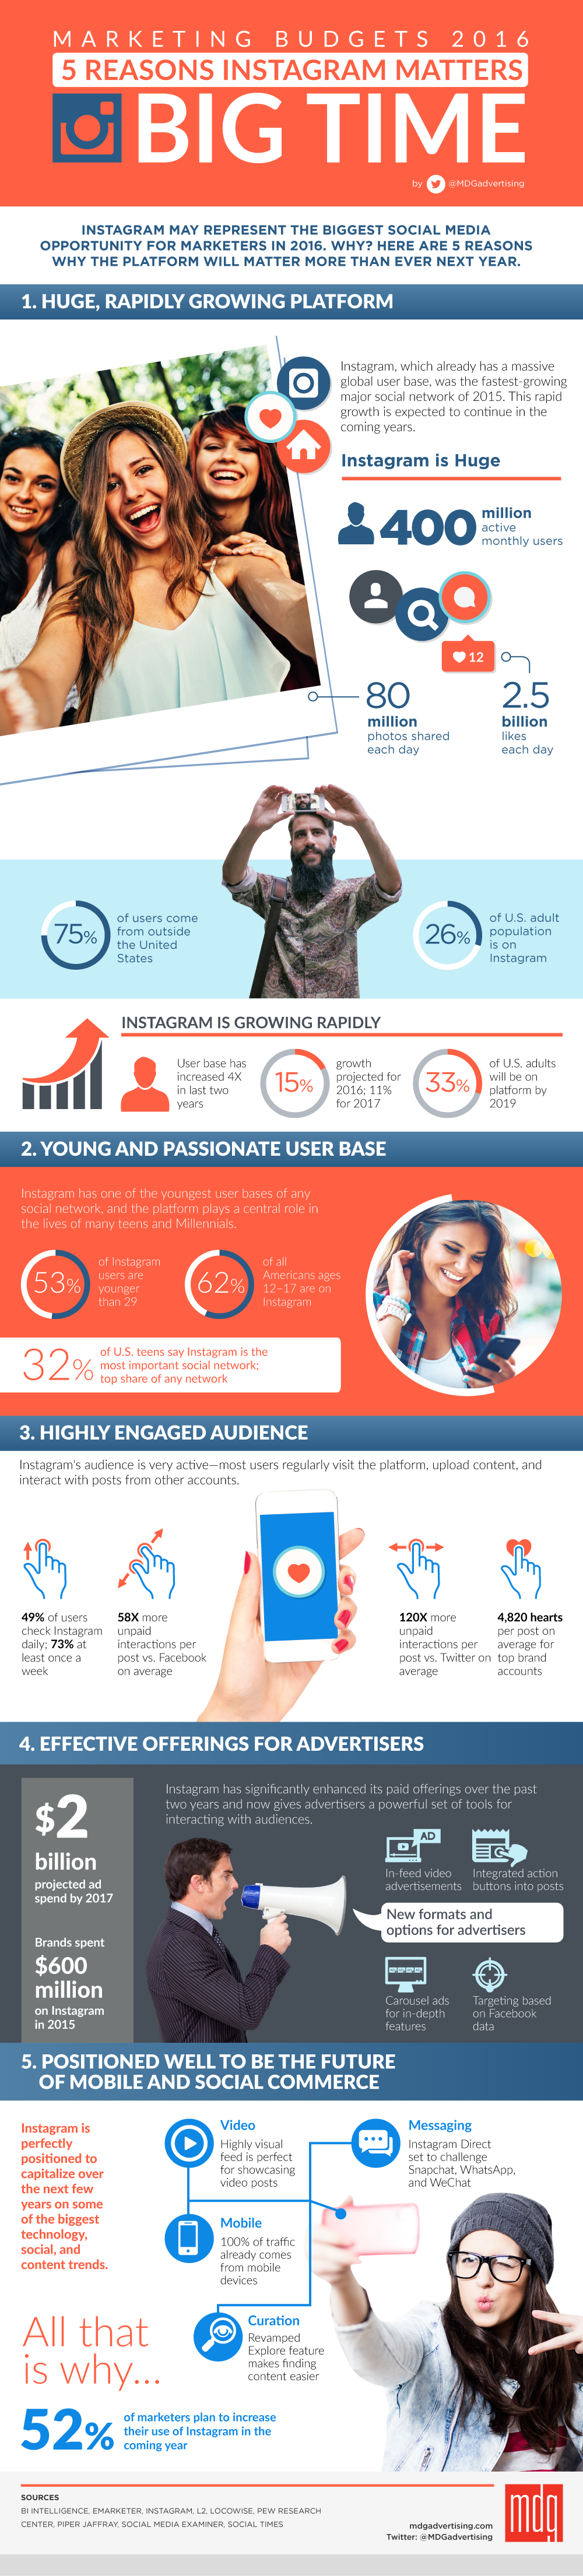 instagram-marketing-2016-infographic